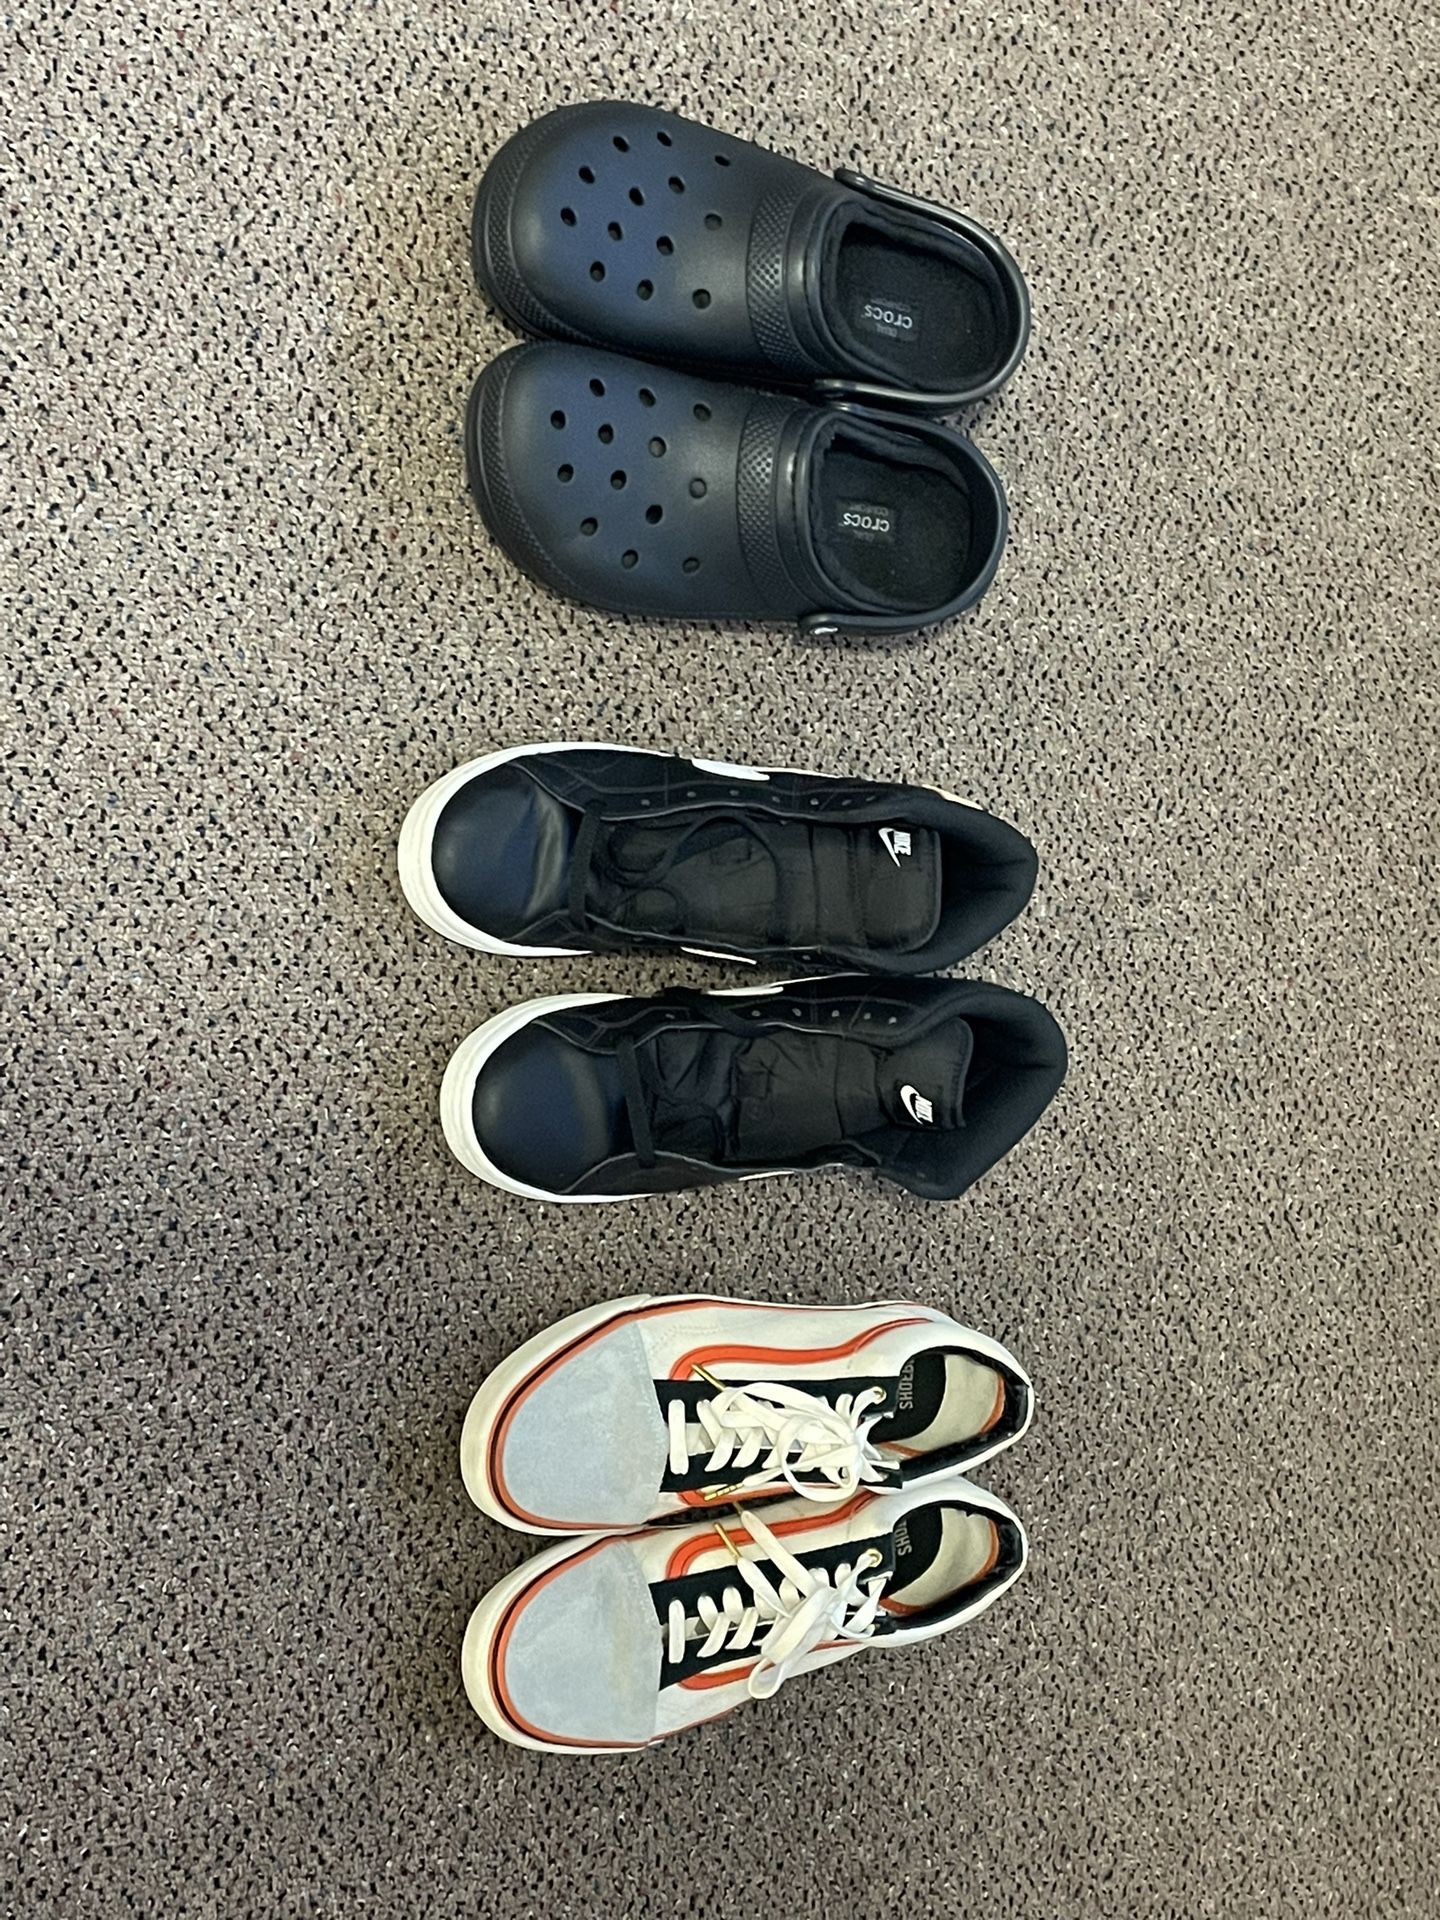 Shoes (Vans , Crocs, Nike)